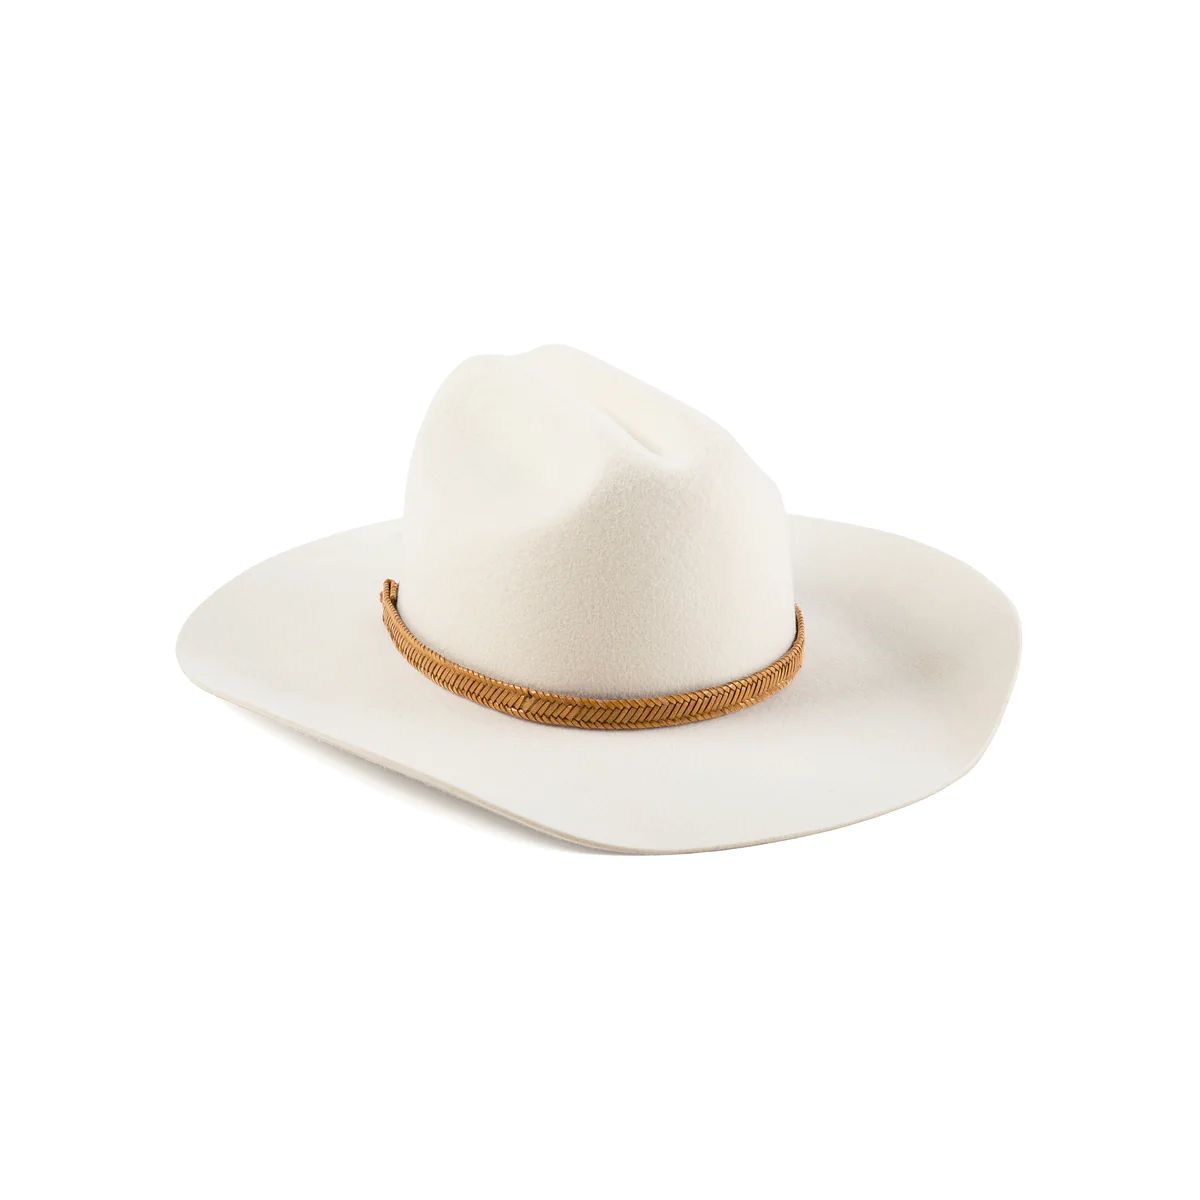 The Ridge Wool Felt Cowboy Hat in White - Lack of Color US | Lack of Color